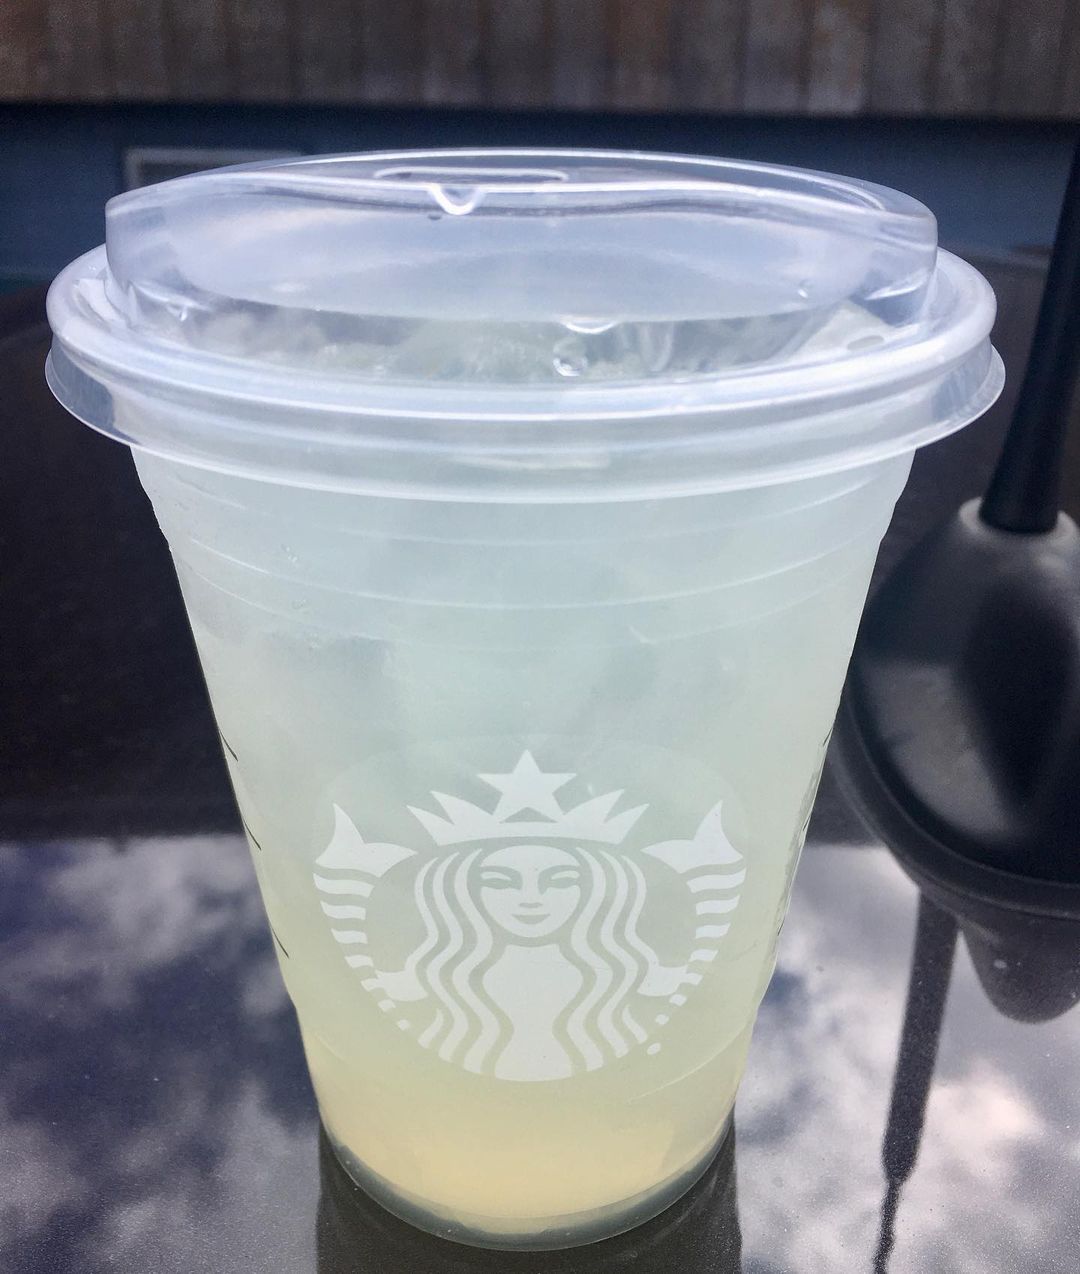 cup of starbucks lemonade on glass surface